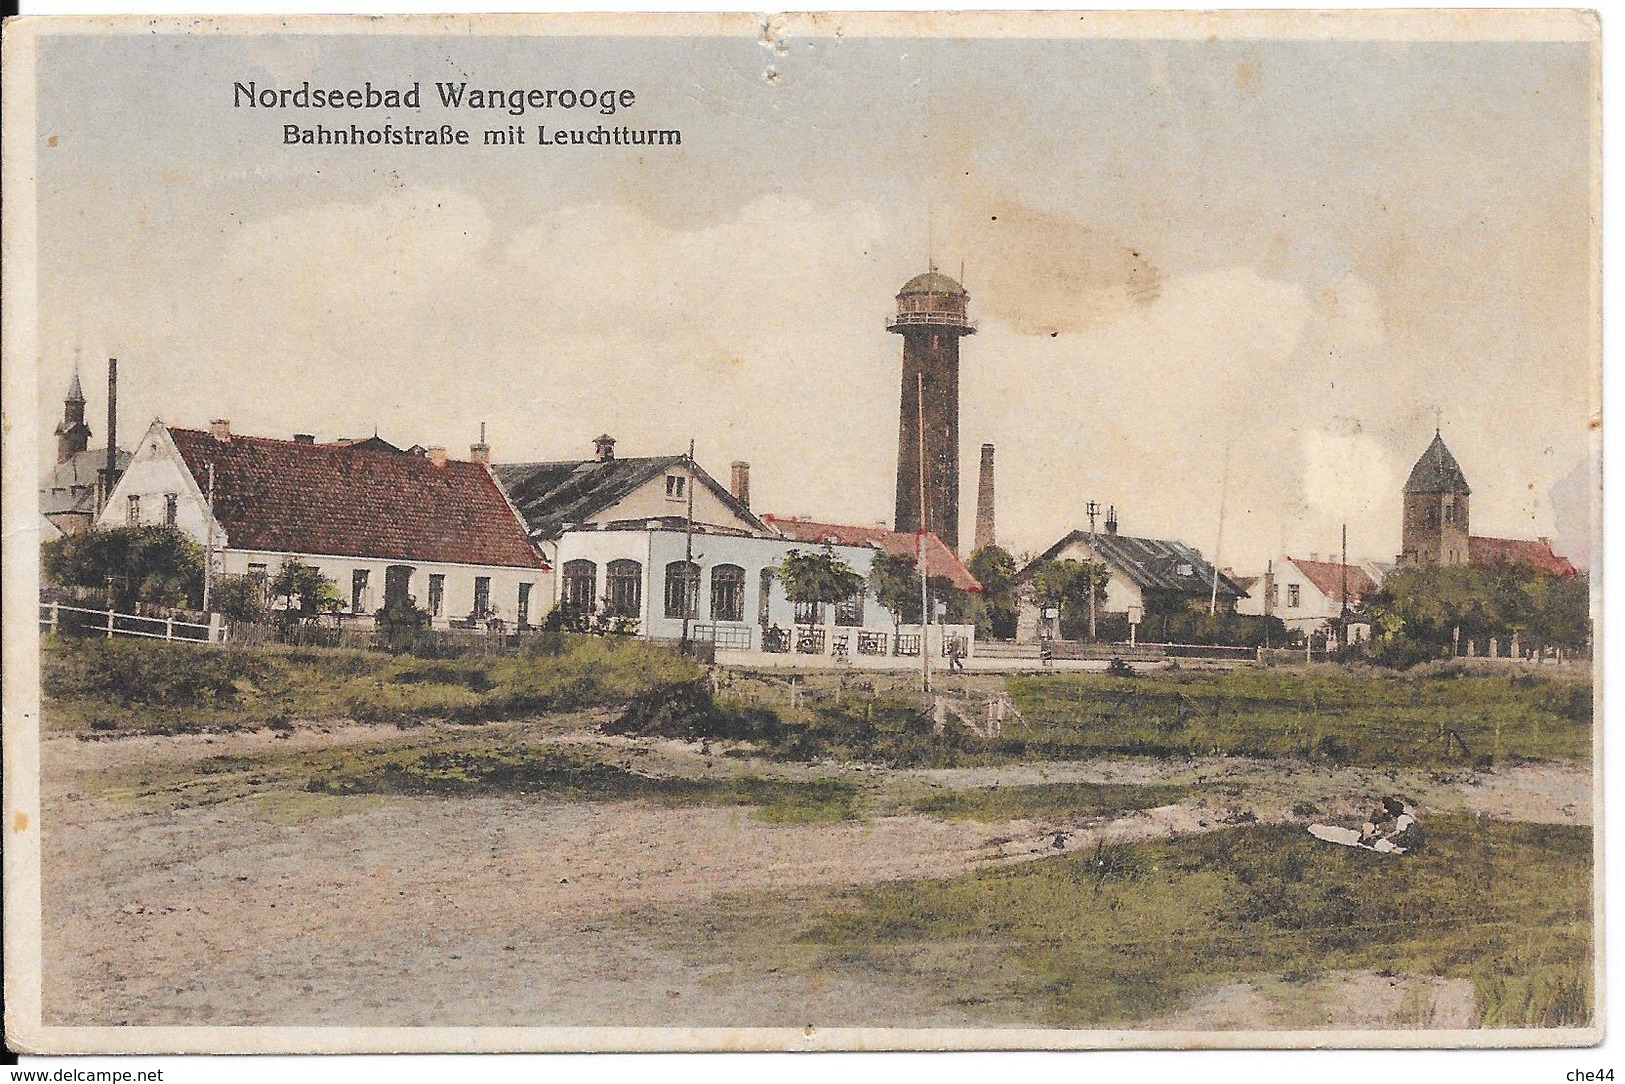 Bahnhofstrabe Mit Leuchtturm. Norseebad Wangerroge. (Voir Commentaires) - Wangerooge